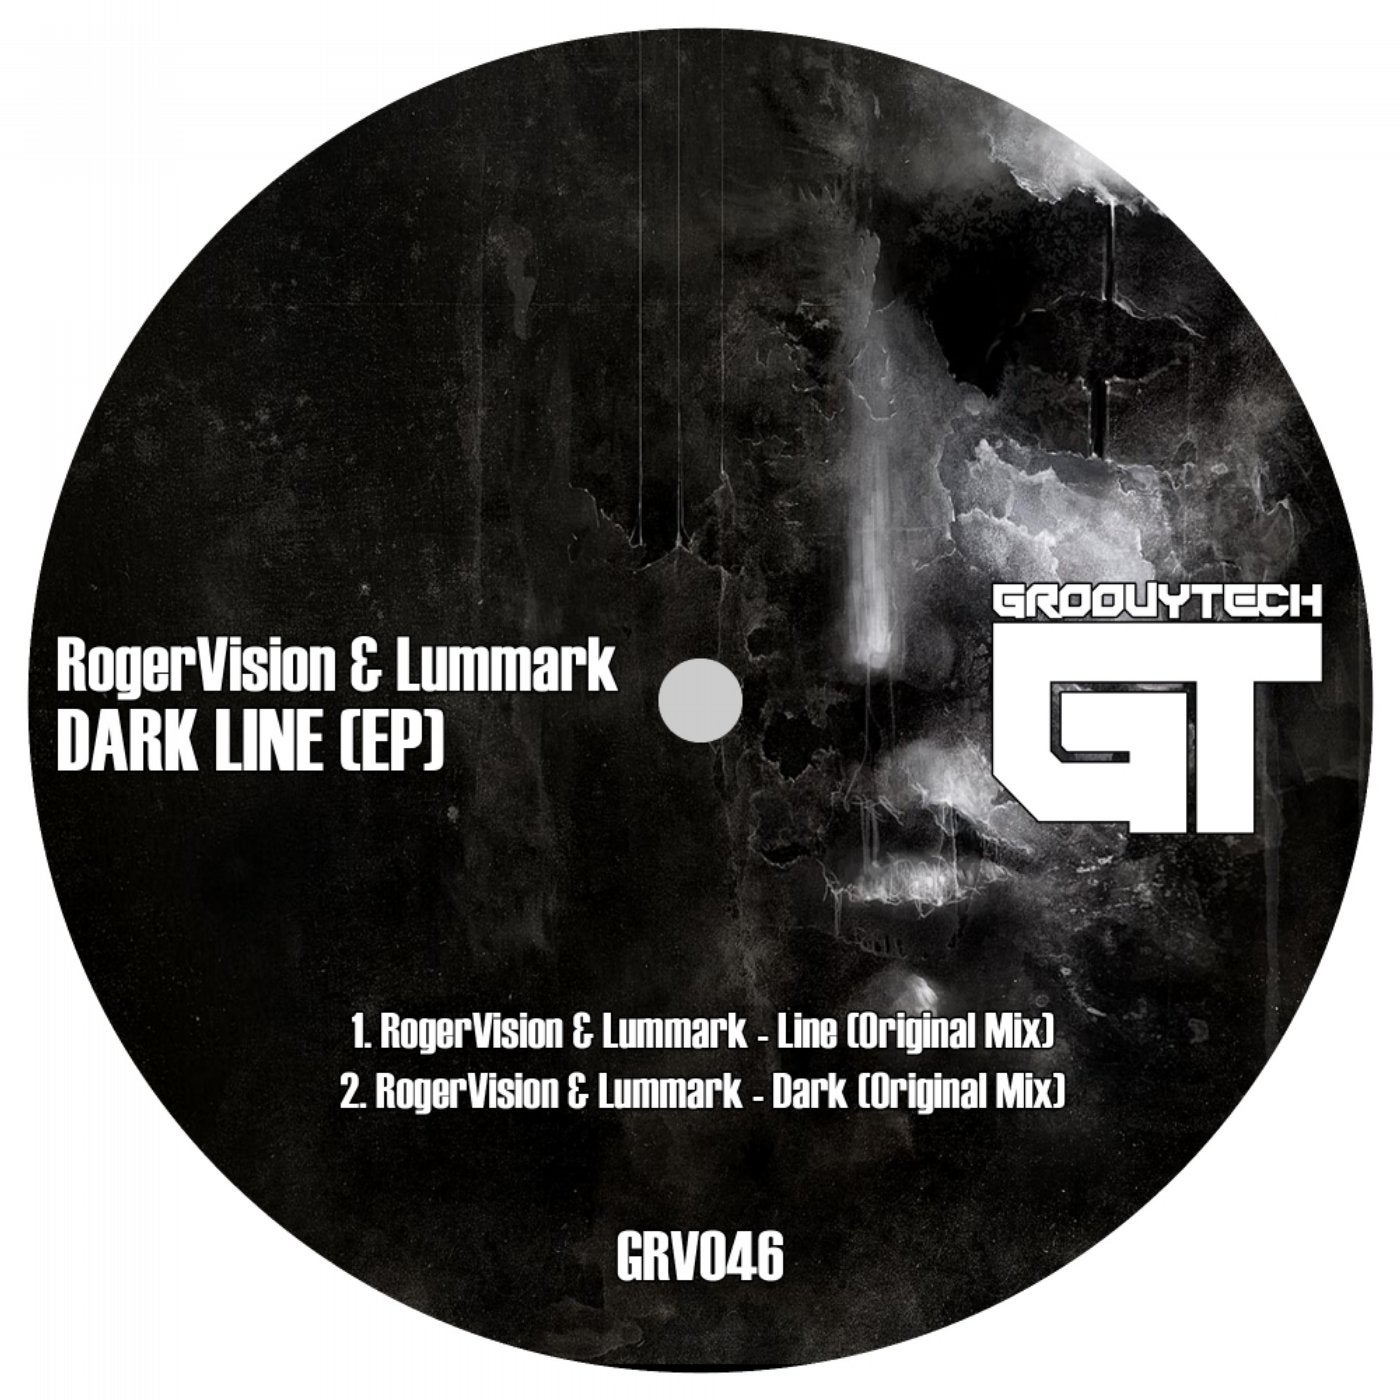 Dark Line EP